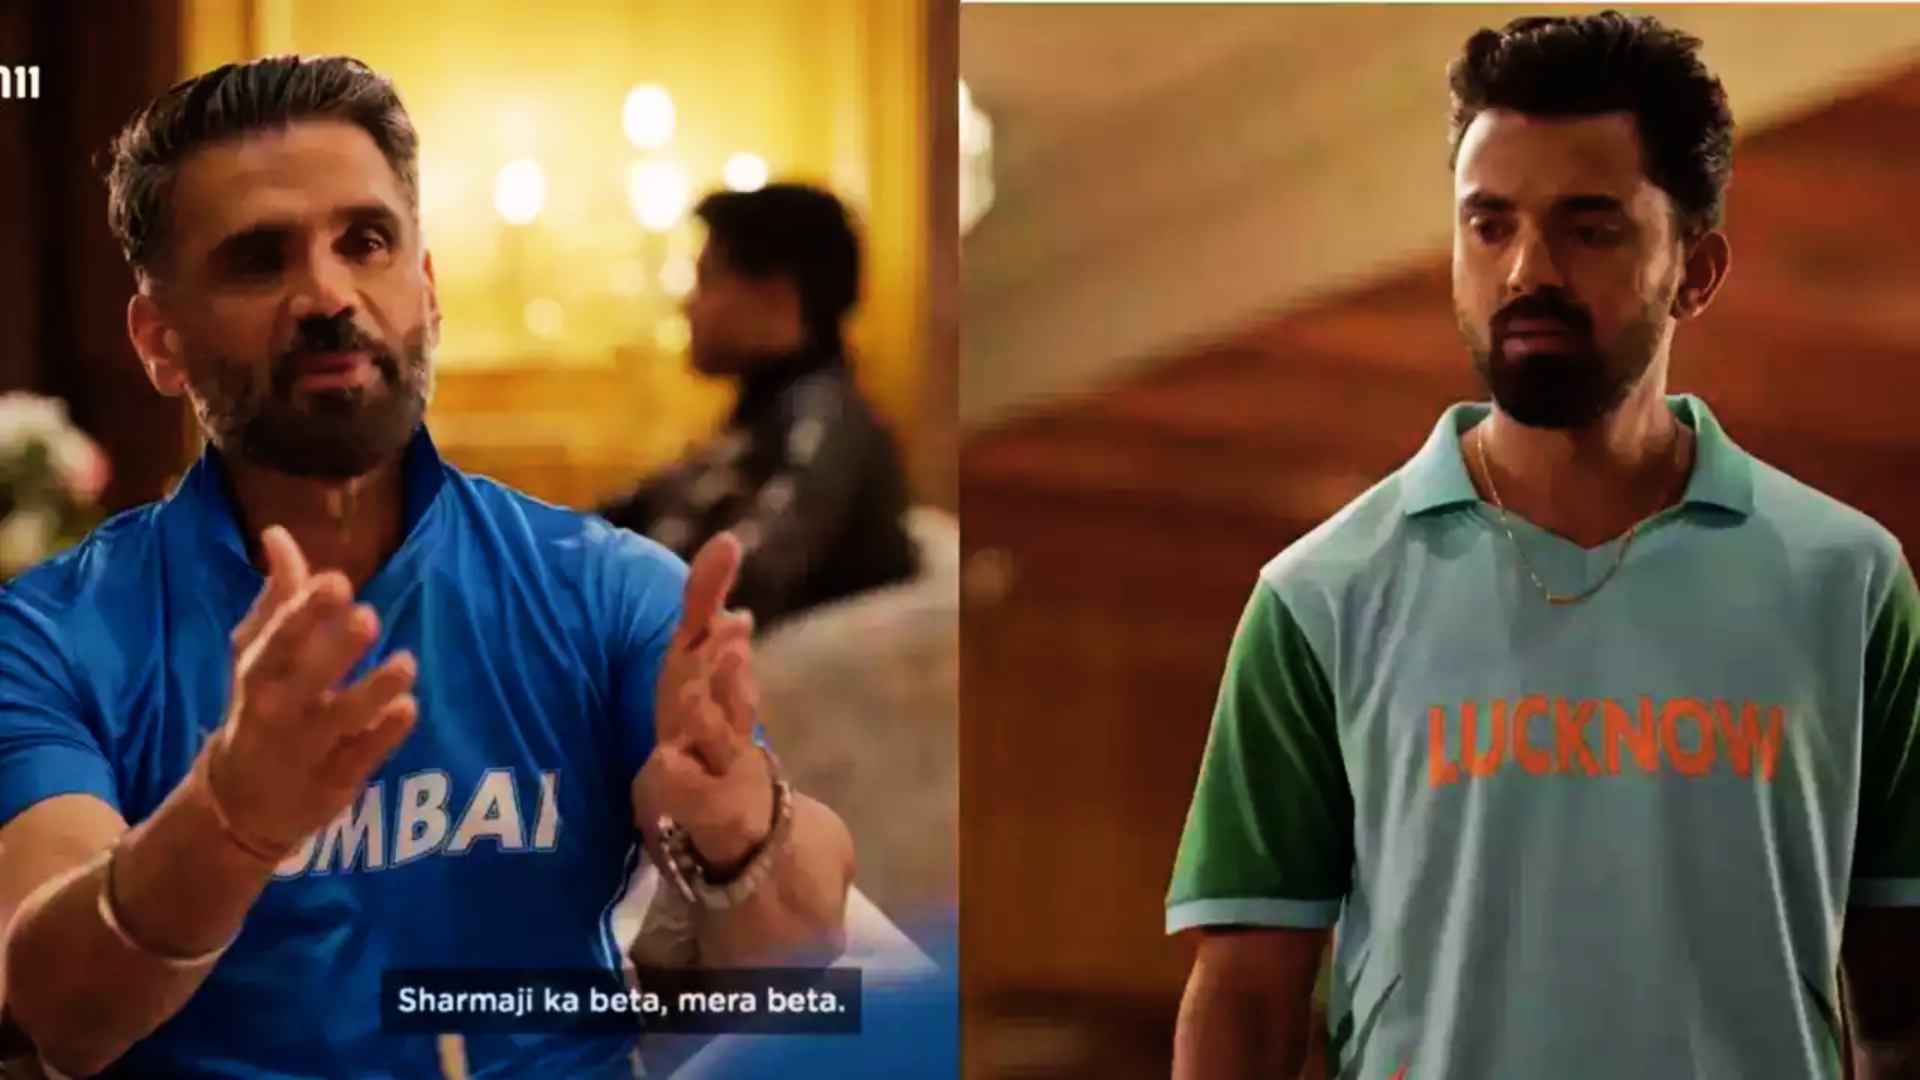 Sunil Shetty Says “No Papa..” To KL Rahul In This IPL Ad: Watch Video